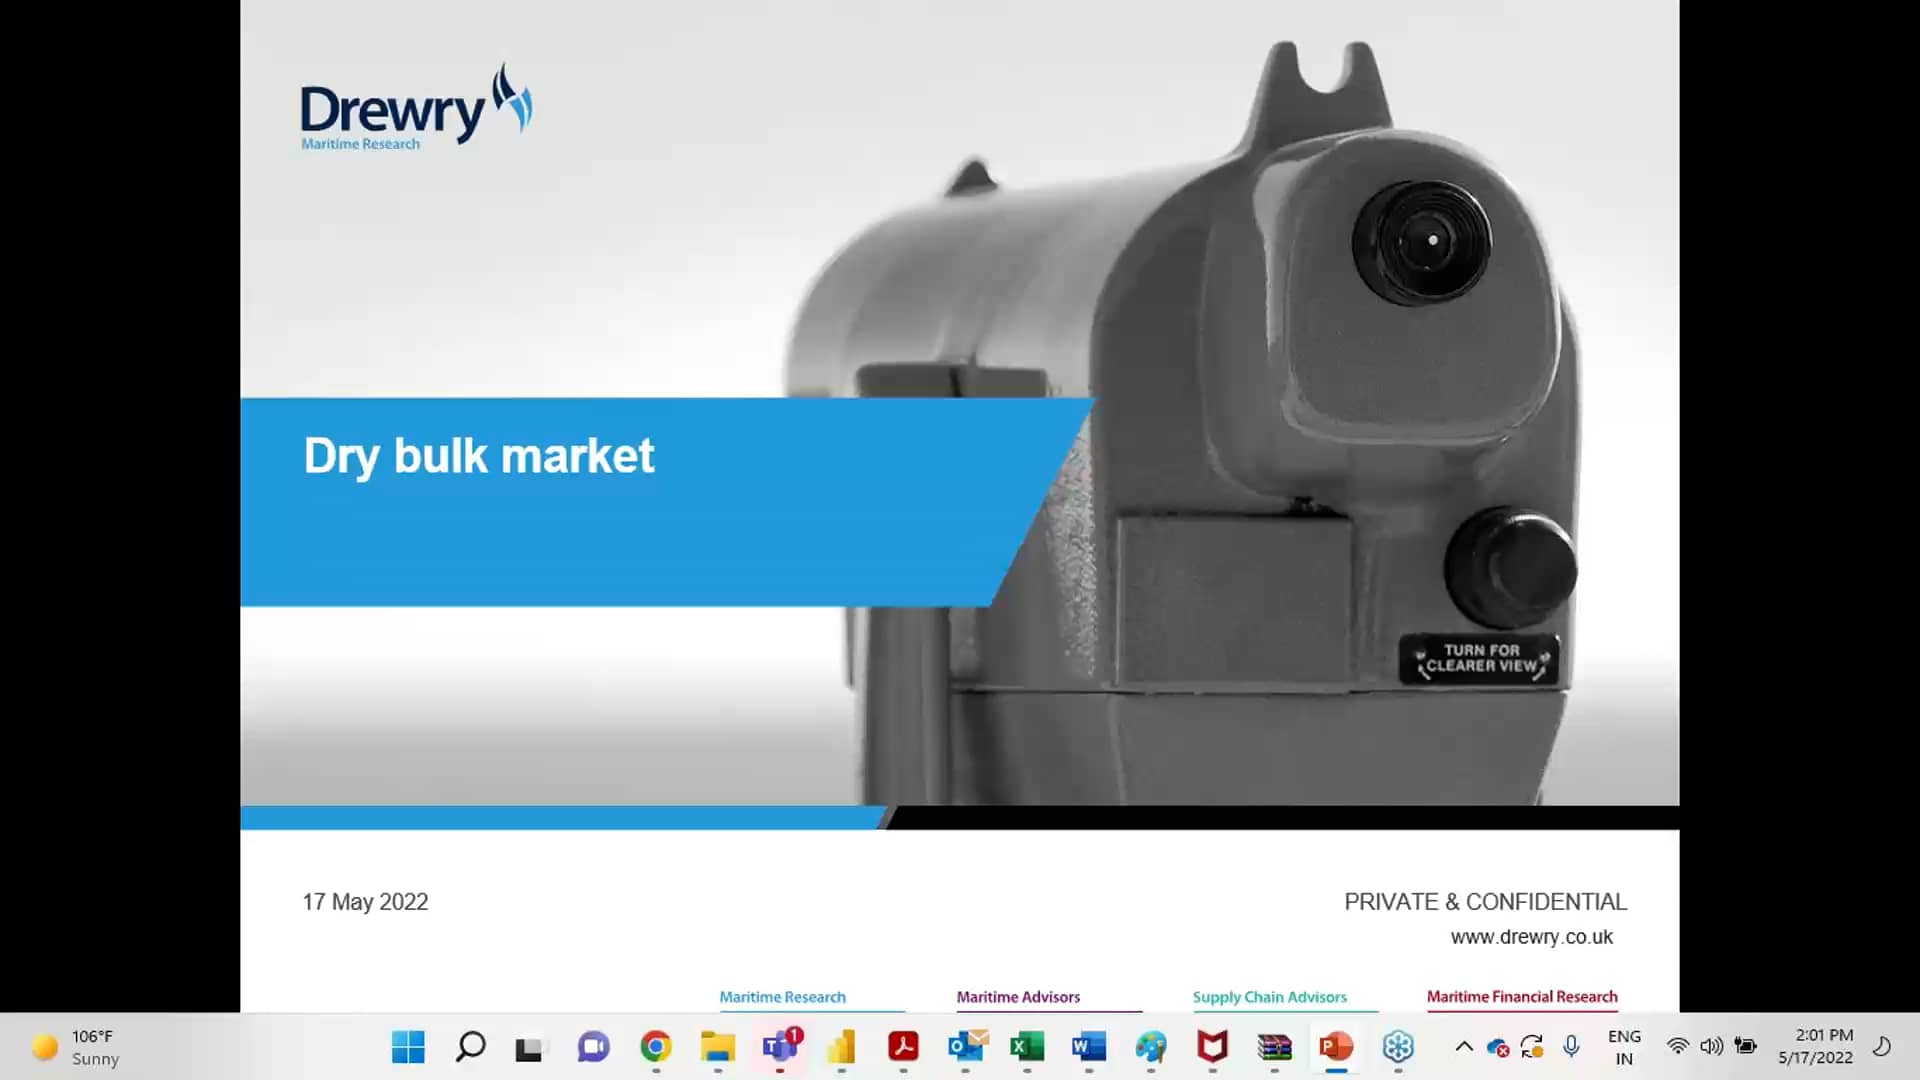 Webinar Dry Bulk Shipping Market Outlook May 2022.mp4 on Vimeo